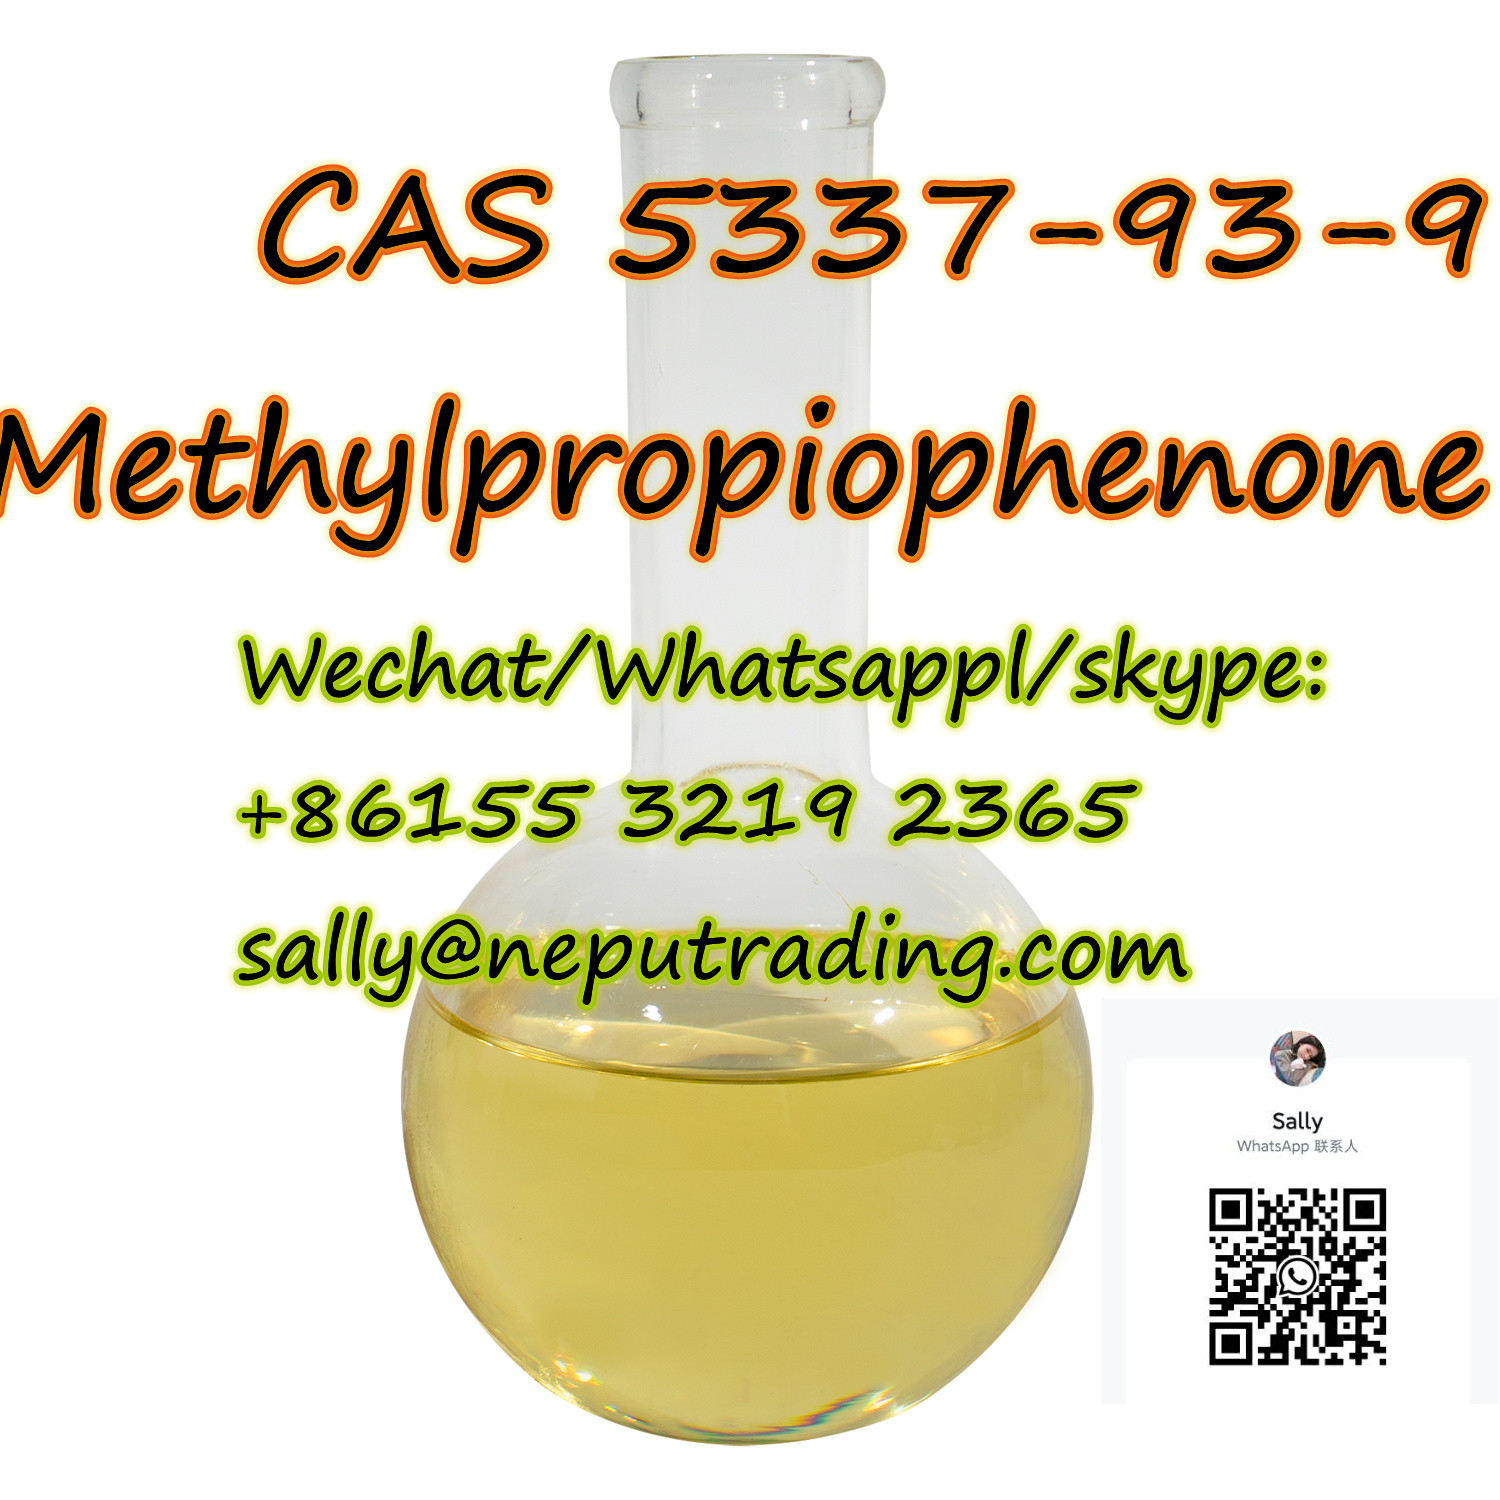 CAS 5337-93-9 Methylpropiophenone whatsapp:+8615532192365 - photo